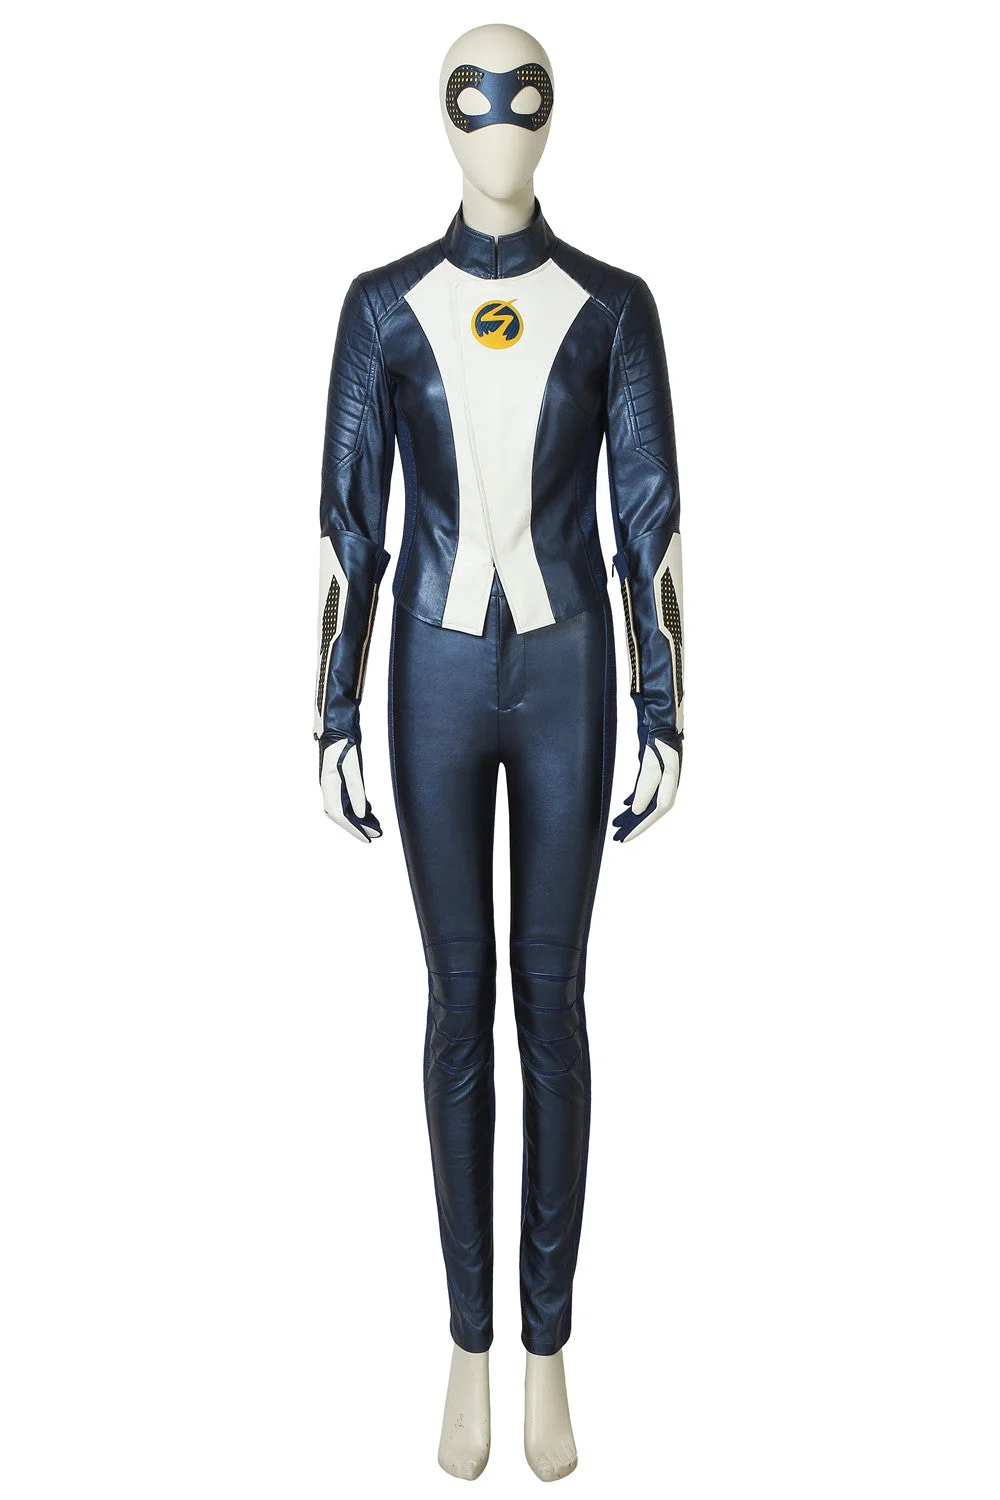 Nora Allen Cosplay Costume The Flash Season 5 Female Superhero Uniform